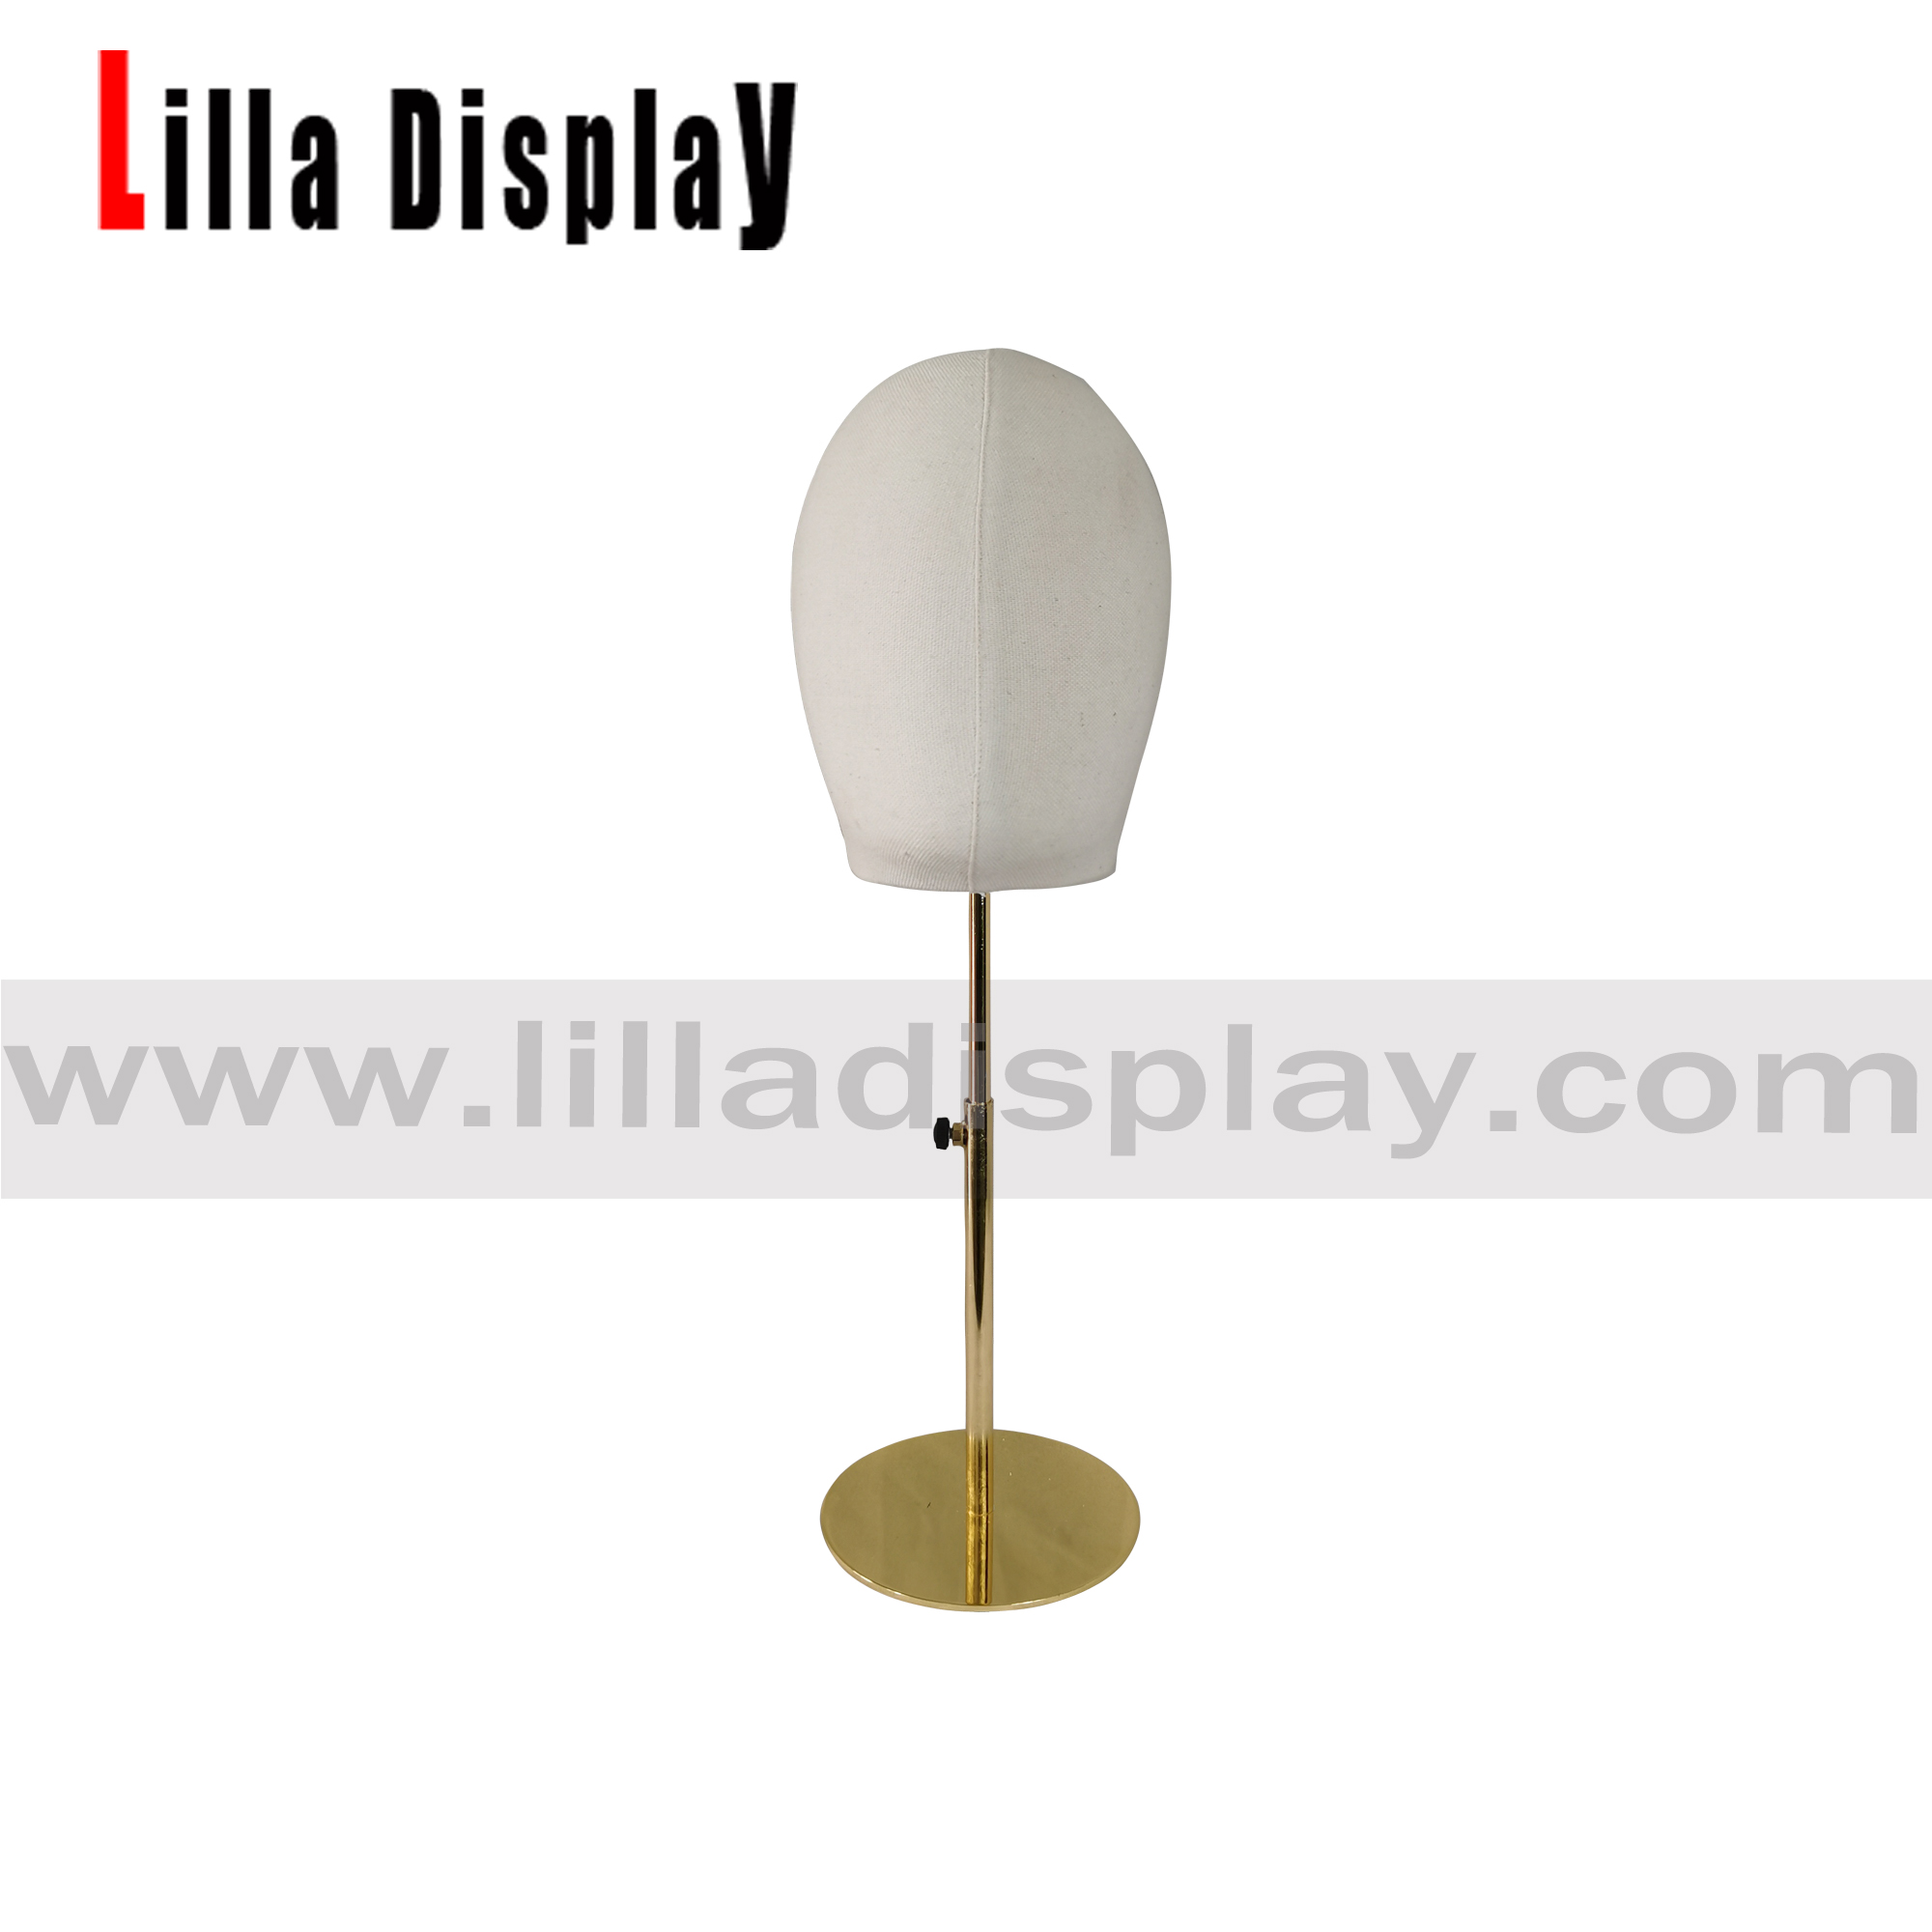 Lilladisplay bianco sporco tela base oro testa di manichino uomo testa d'uovo forma MH01